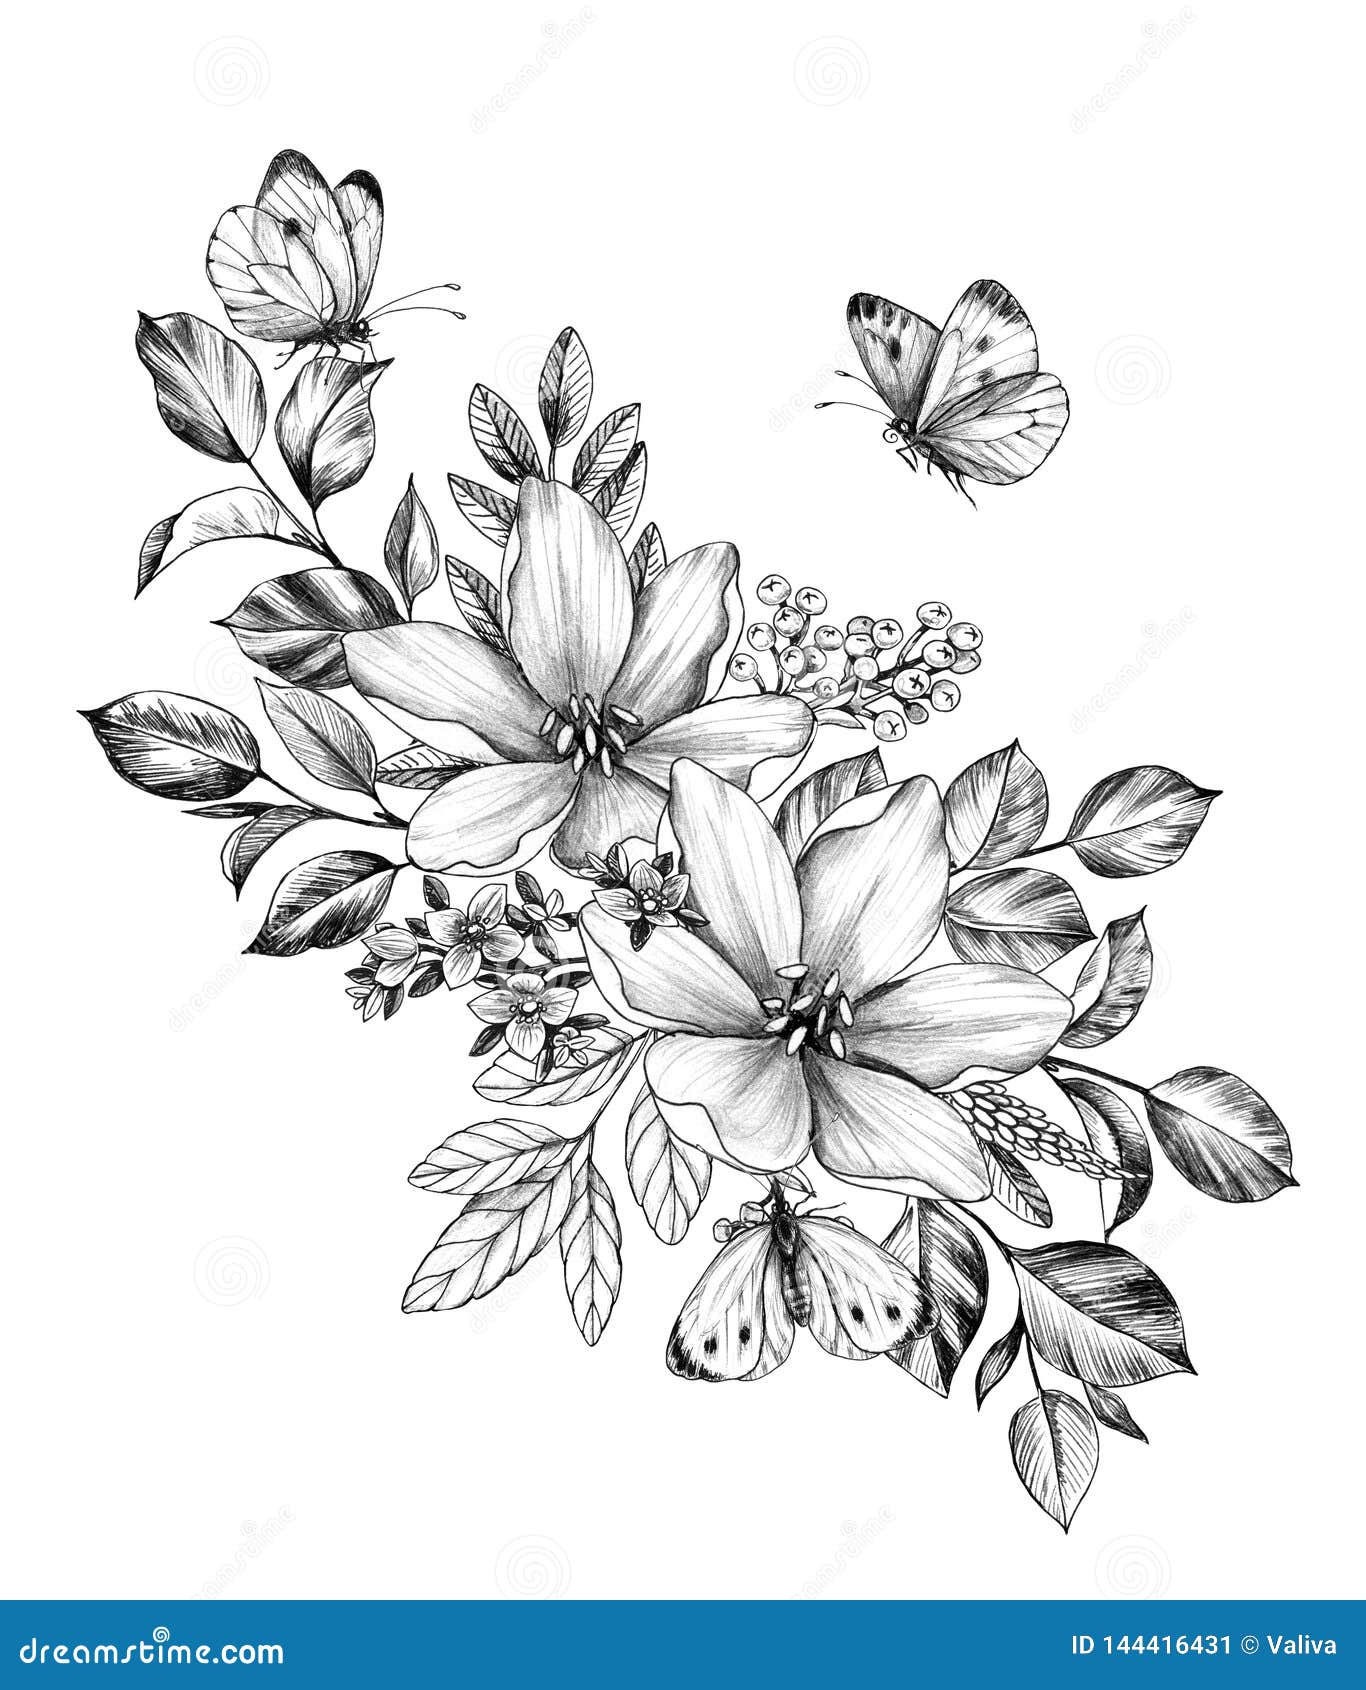 101,997 Pencil Sketch Flowers Images, Stock Photos & Vectors | Shutterstock